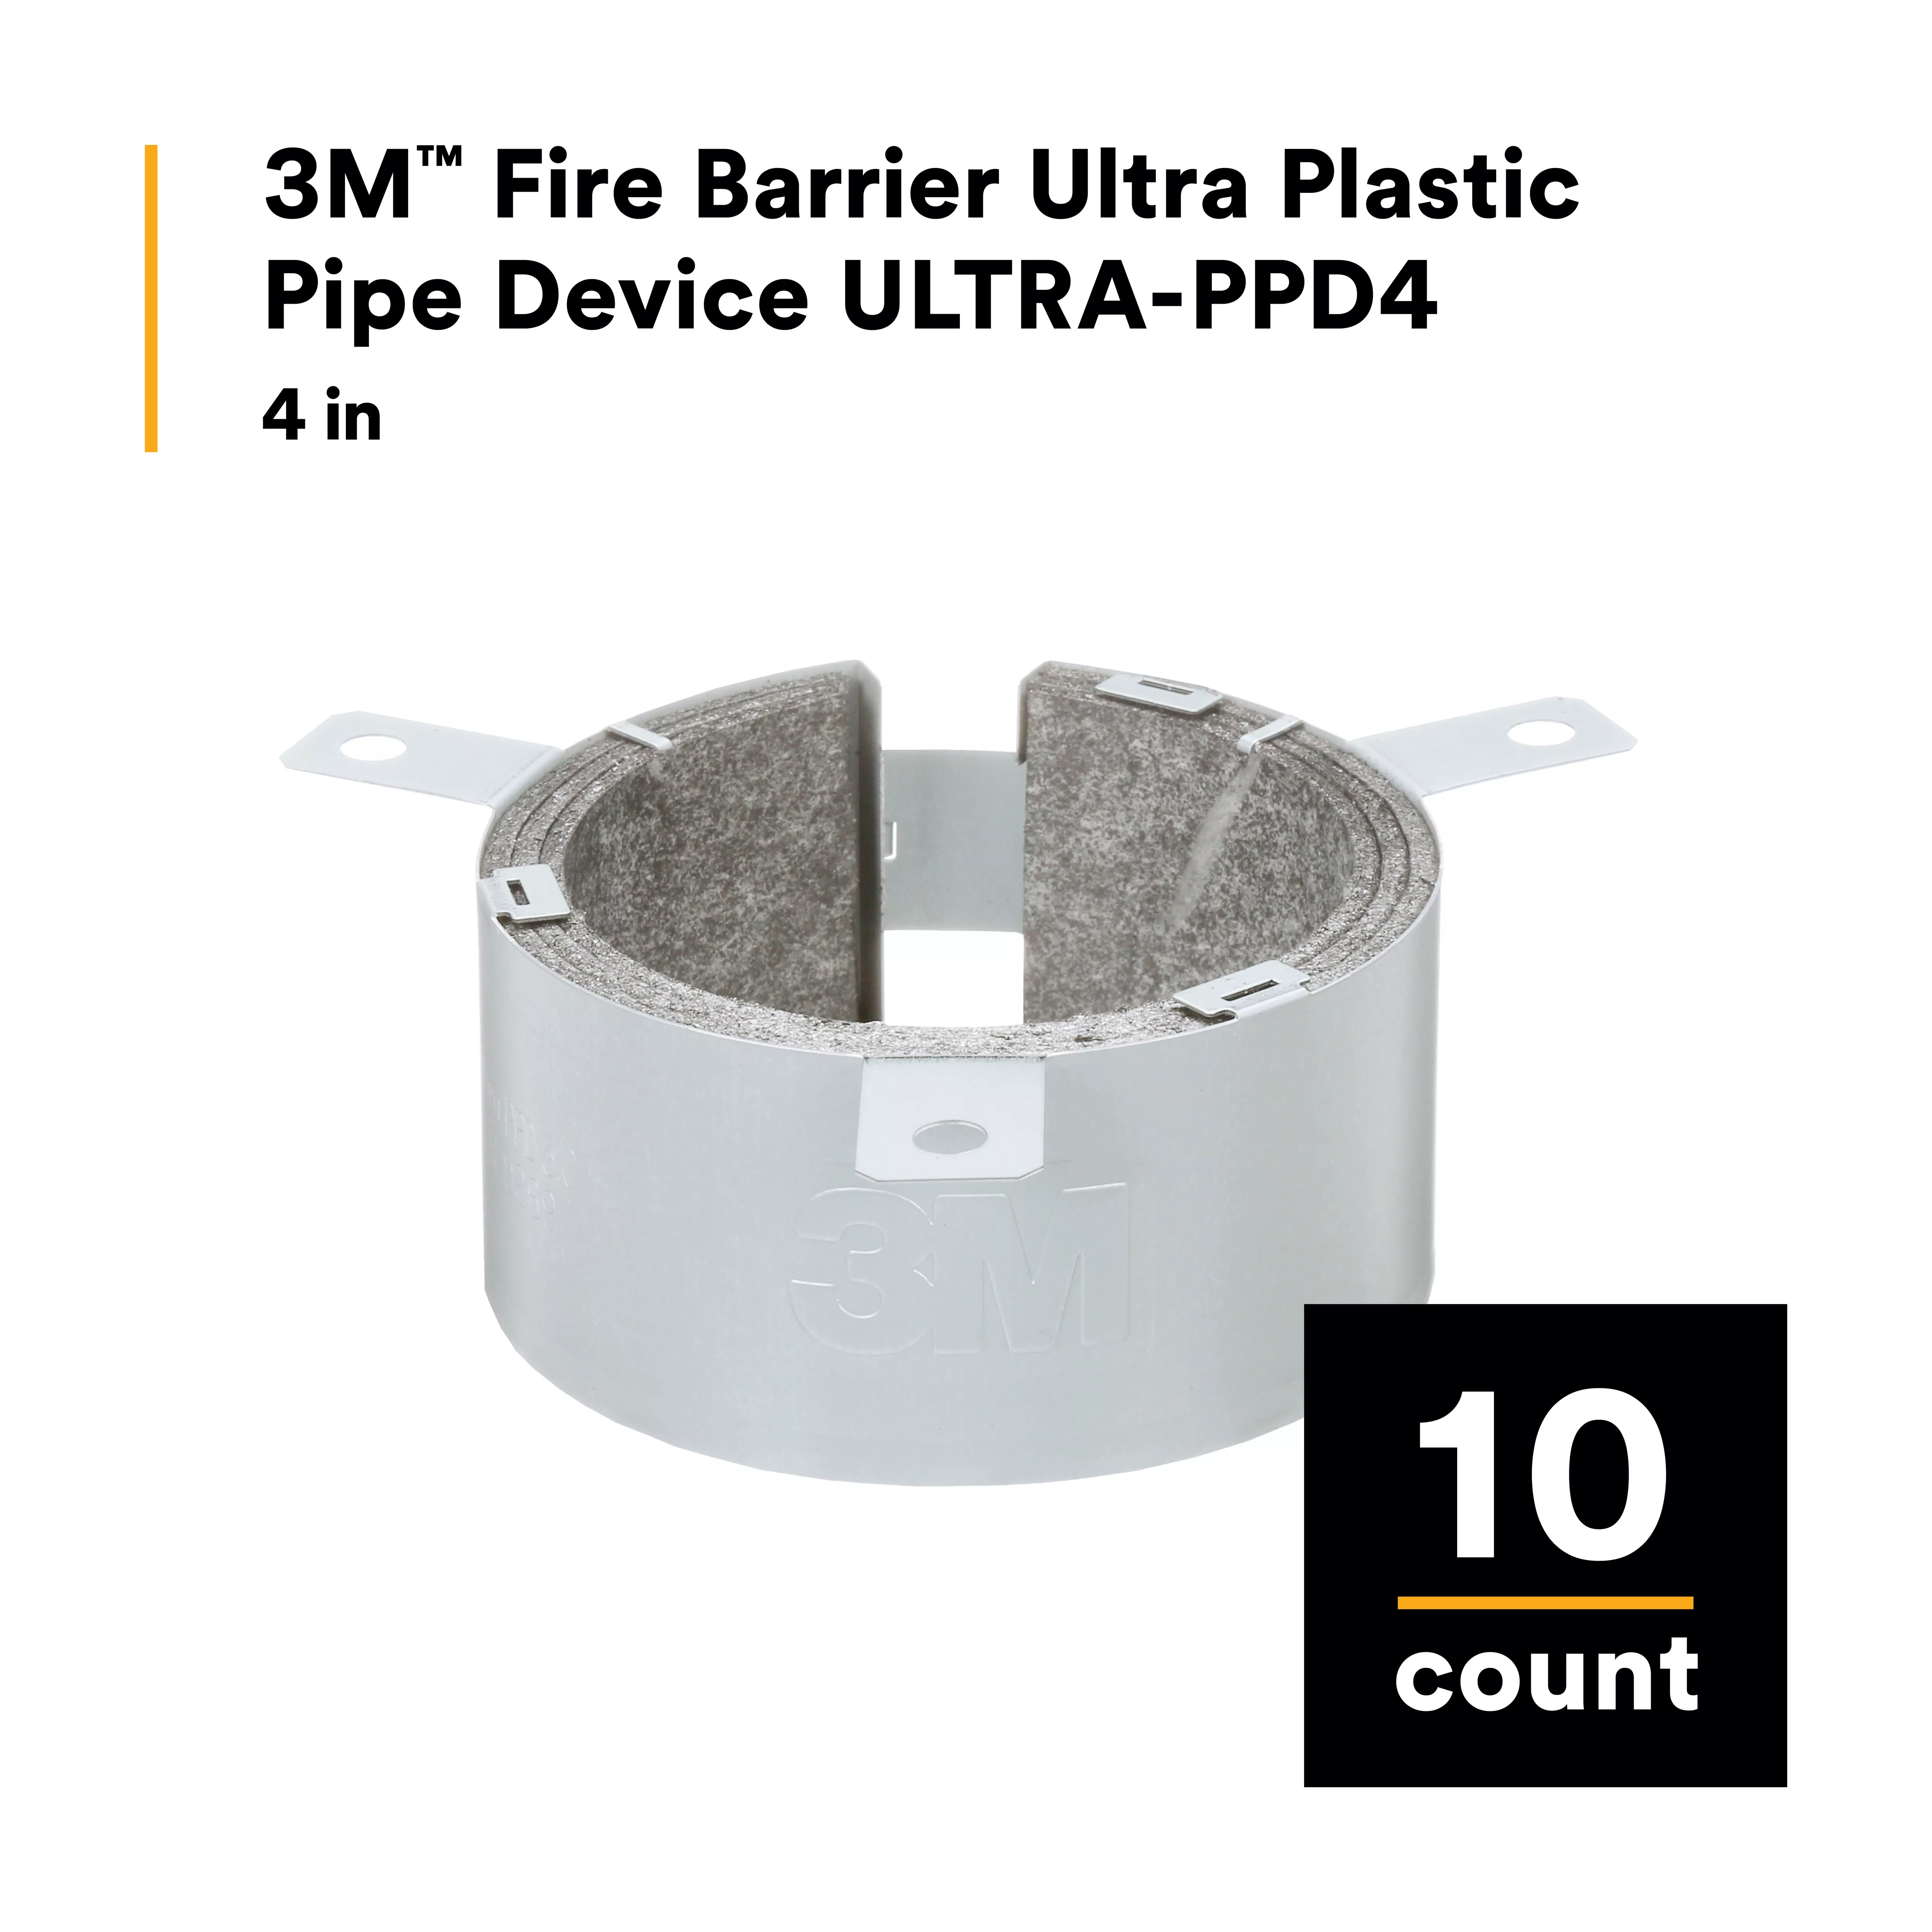 SKU 7000006376 | 3M™ Fire Barrier Ultra Plastic Pipe Device ULTRA-PPD4